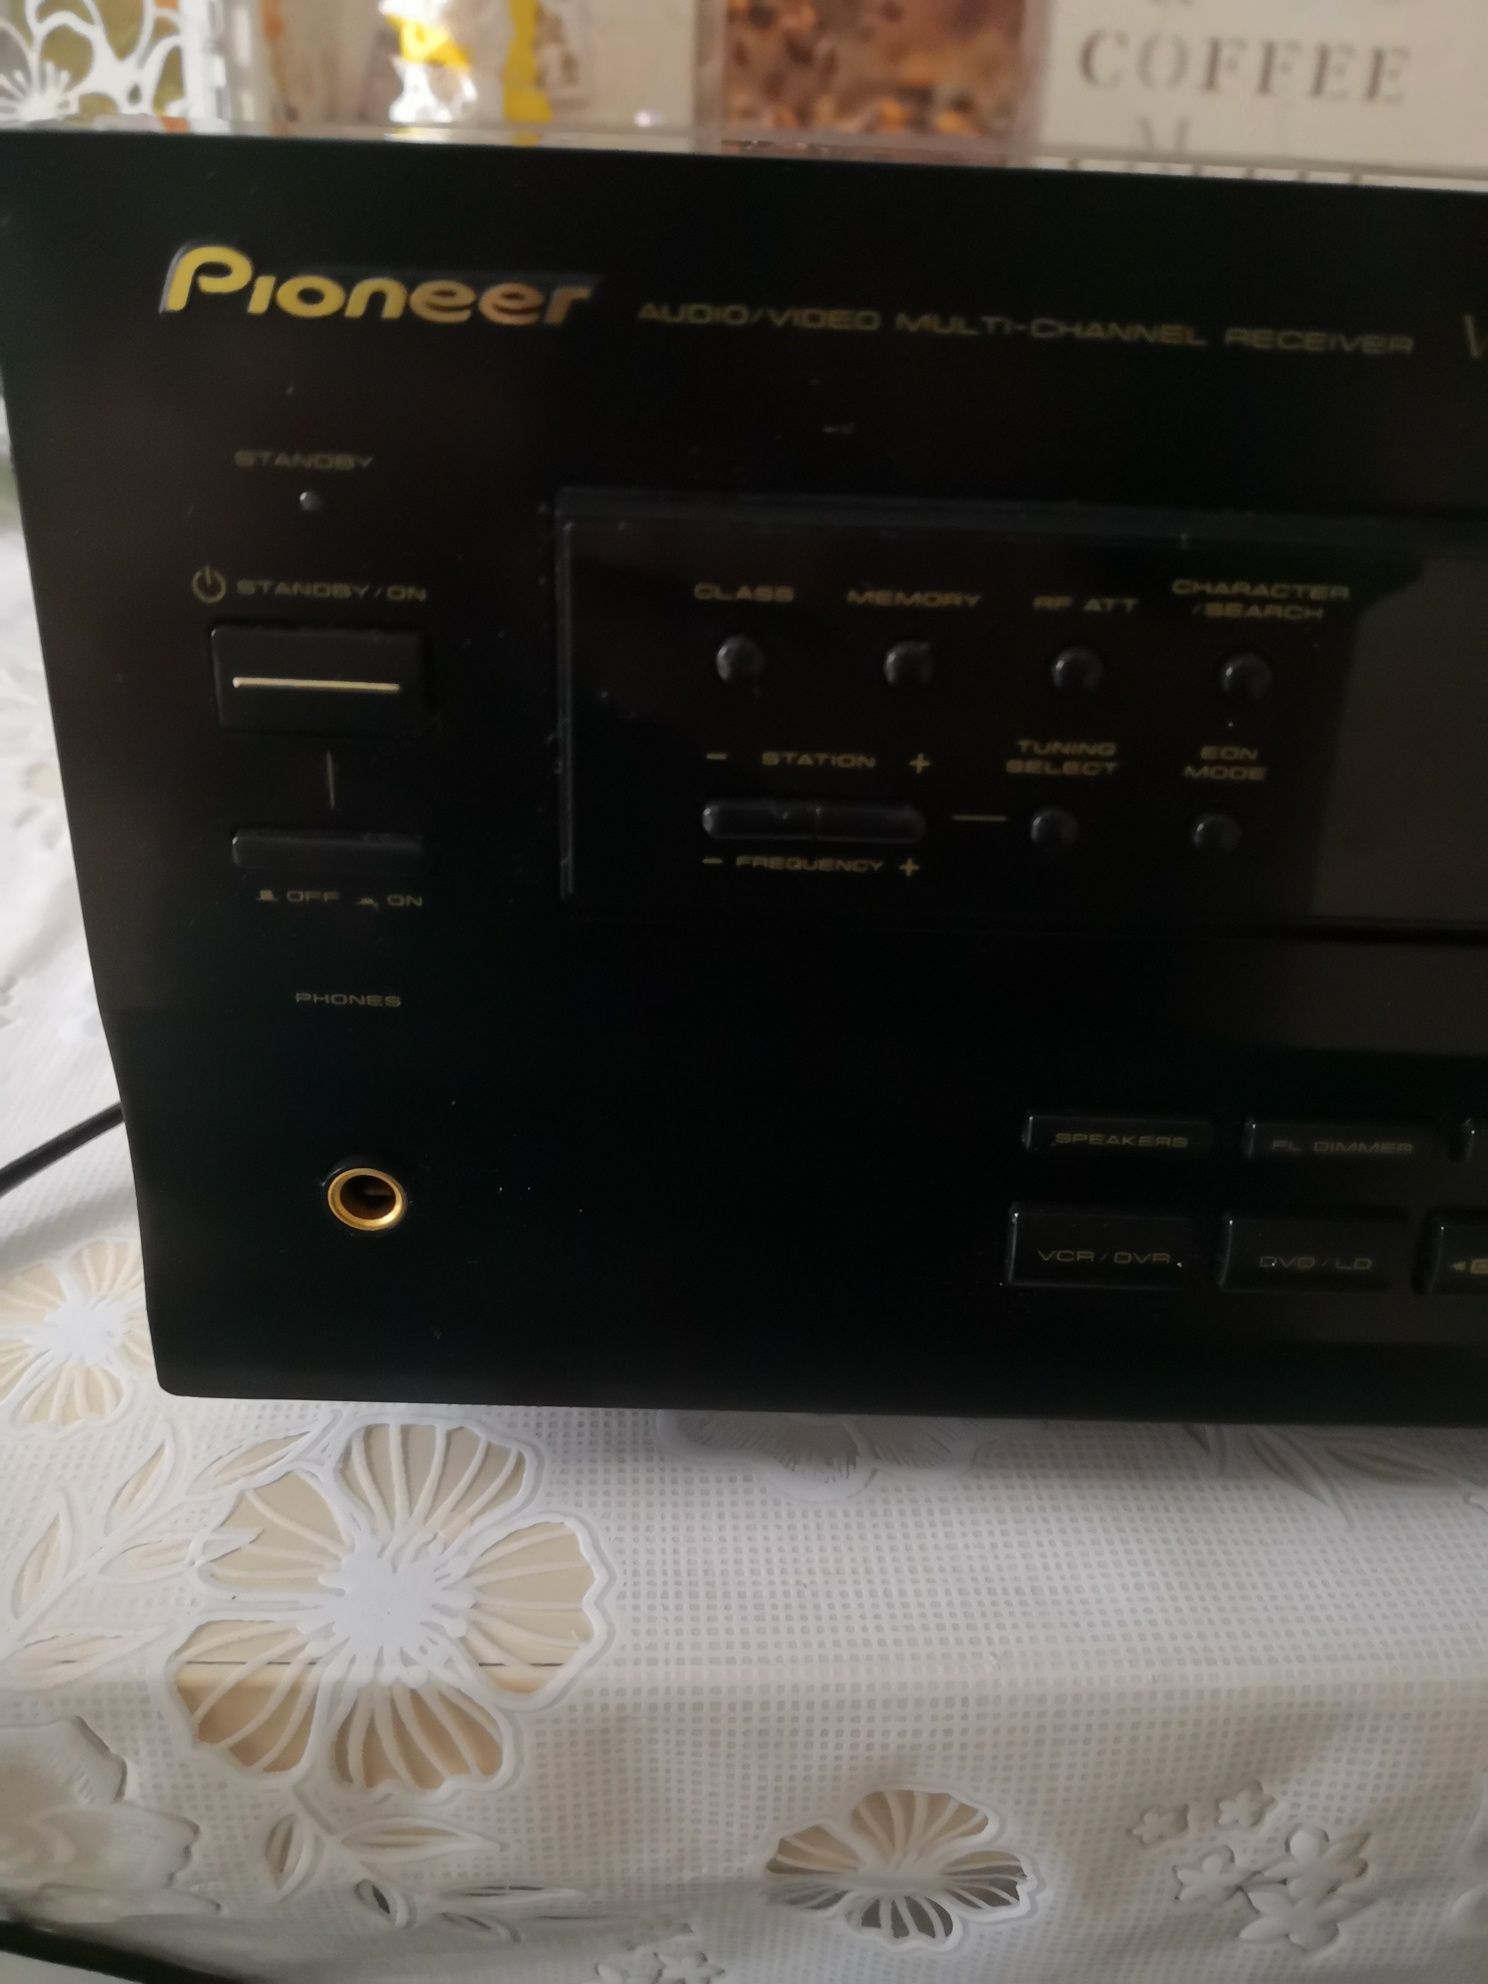 Amplituner Pioneer VSX-409RDS uszkodzony